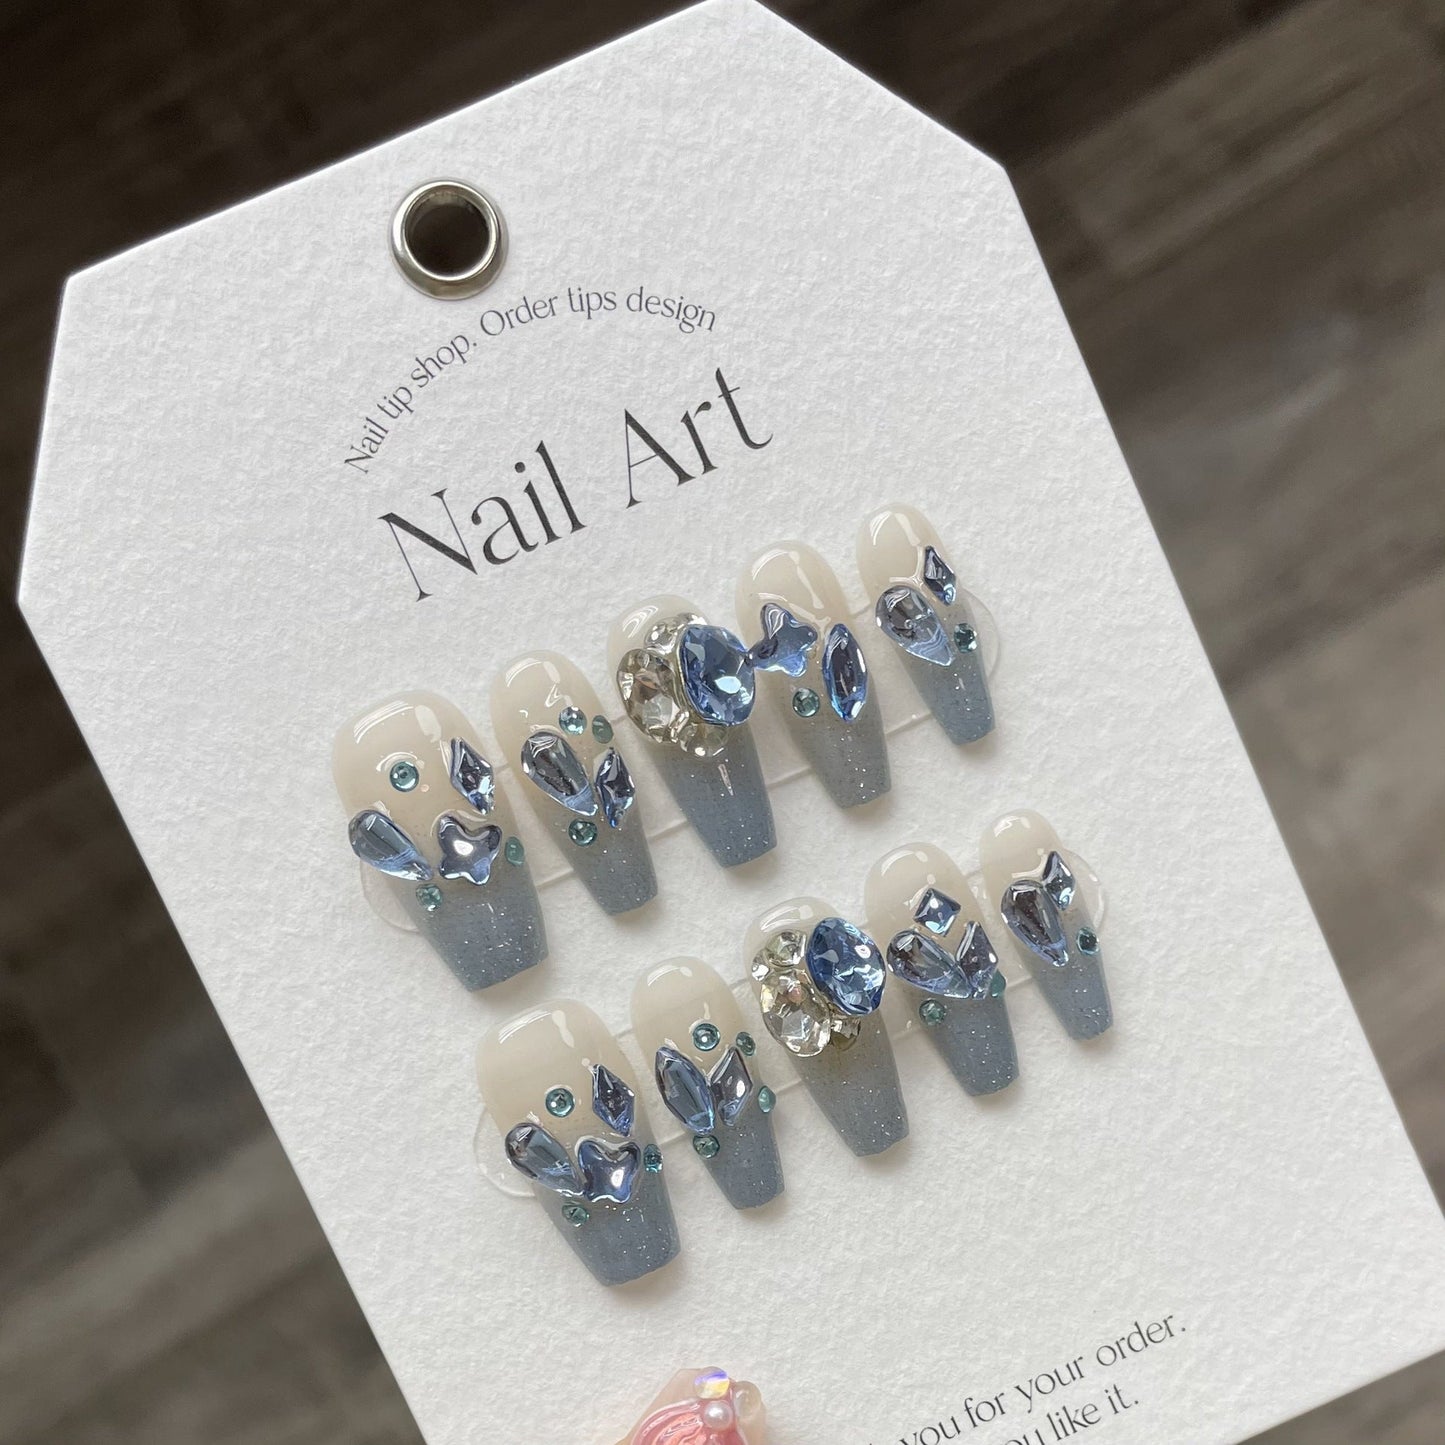 904 Haze Blue style press on nails 100% handmade false nails white blue